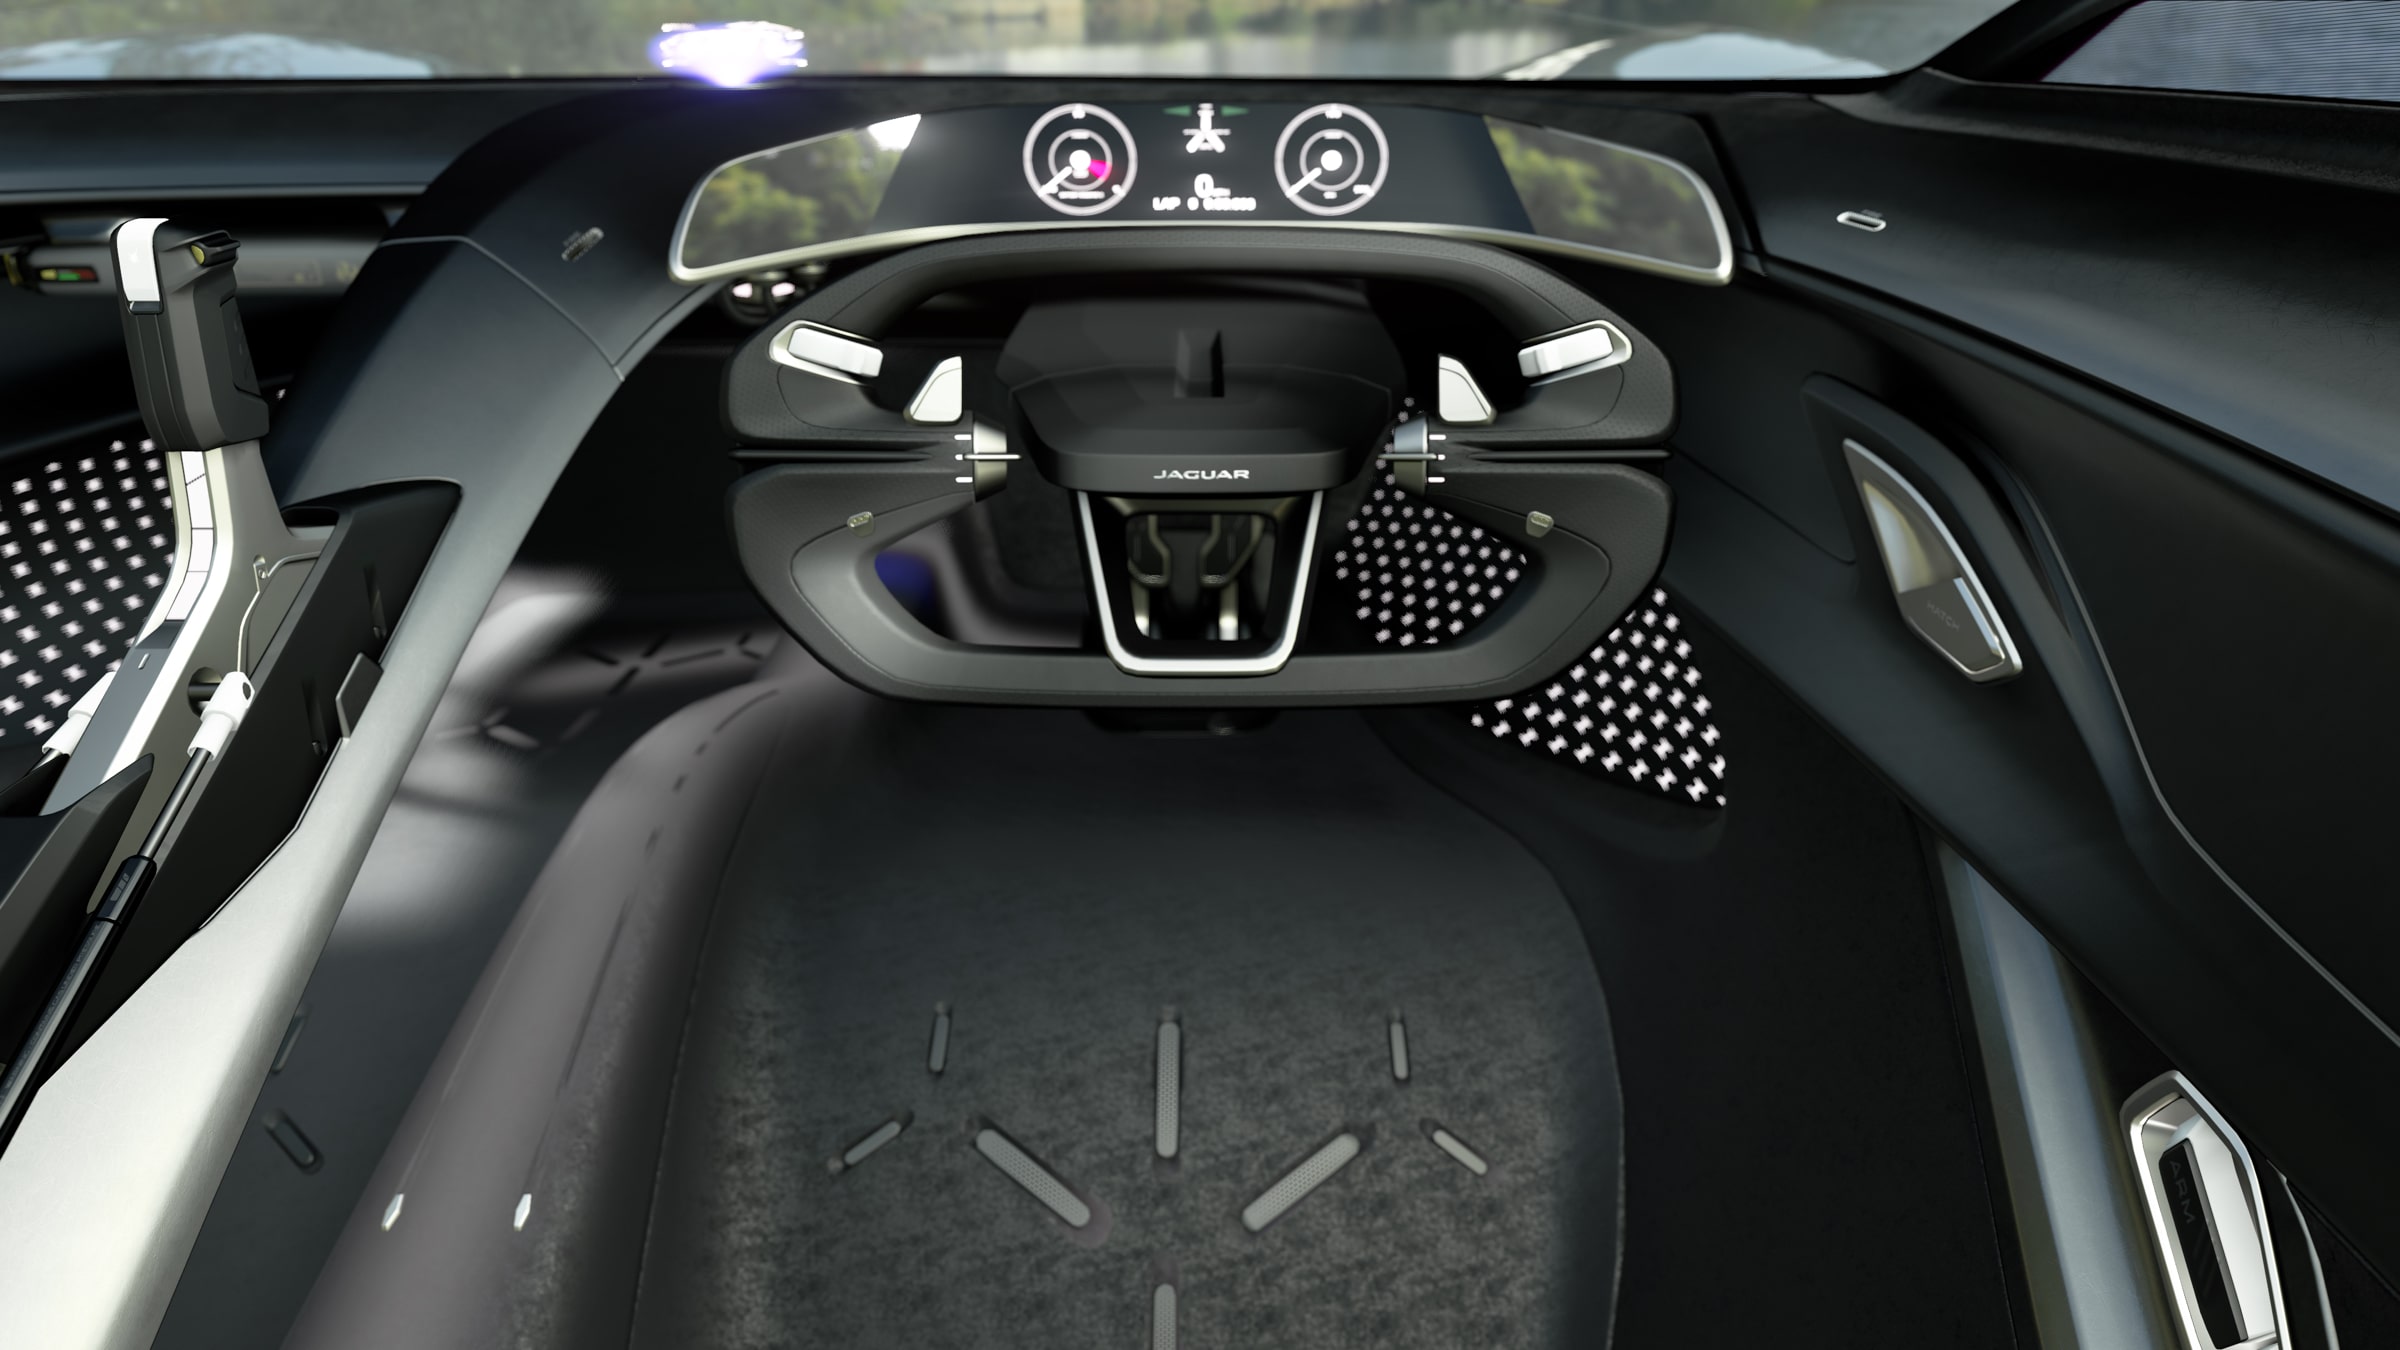 Jaguar GTSV cockpit hmi steering wheel